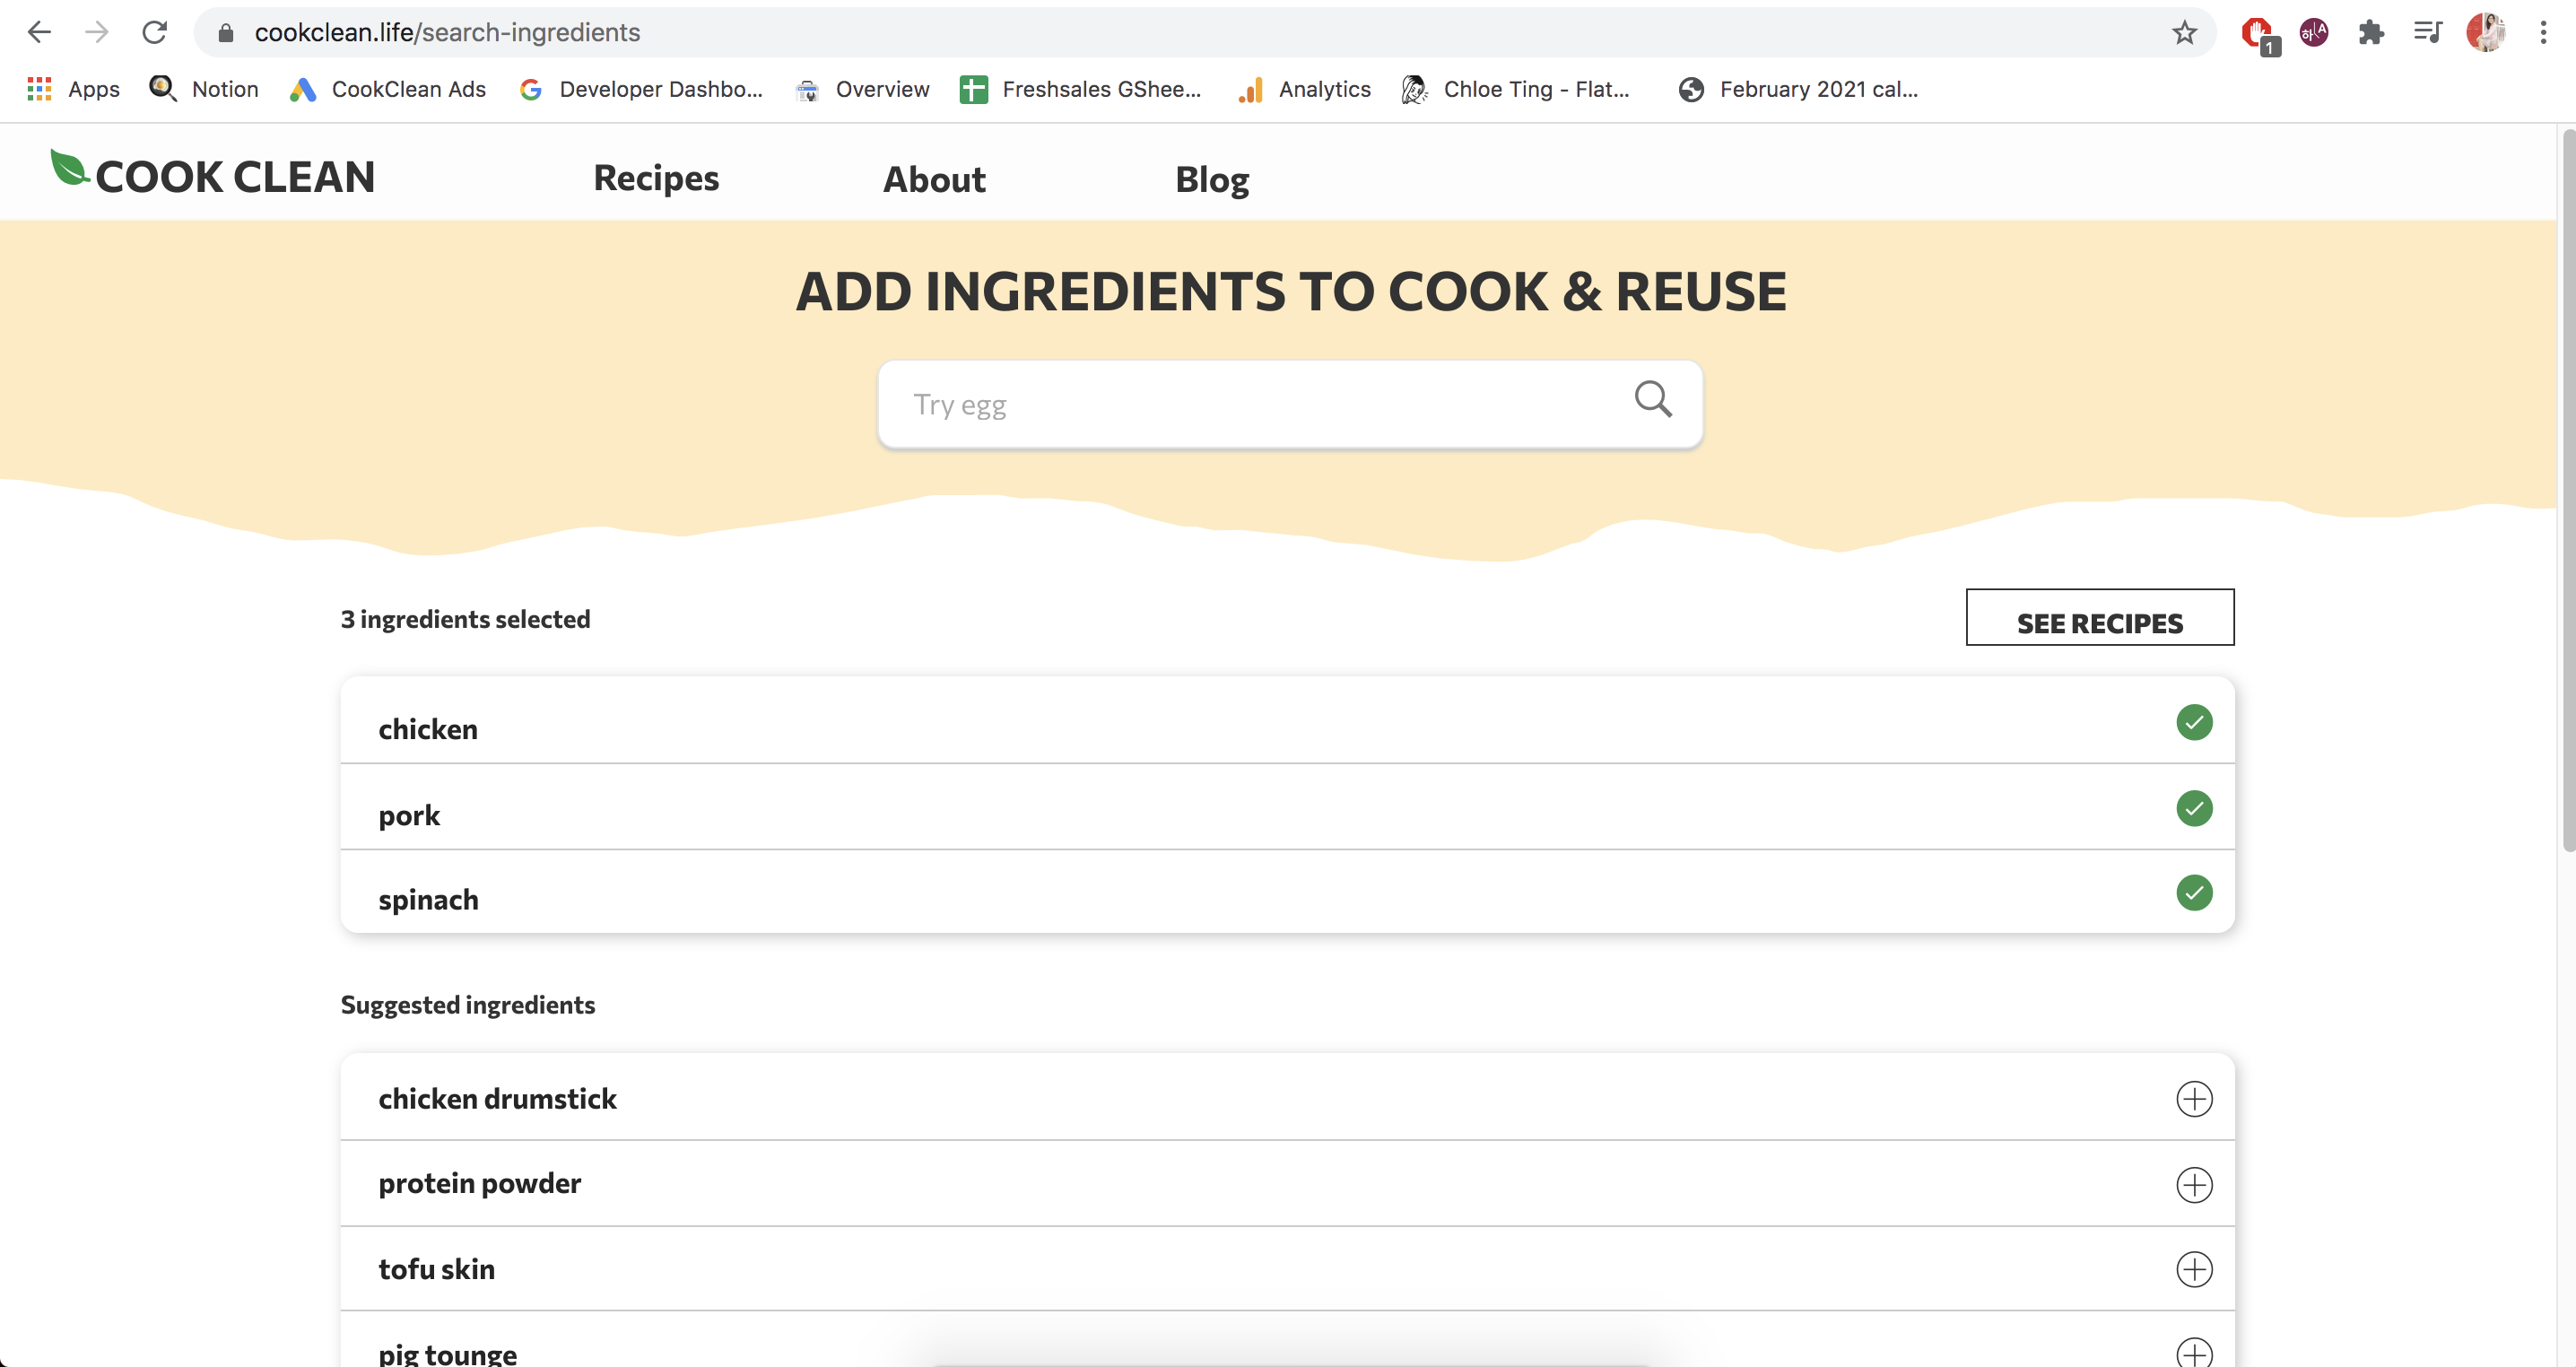 Ingredients page: Choose ingredients you want to reuse